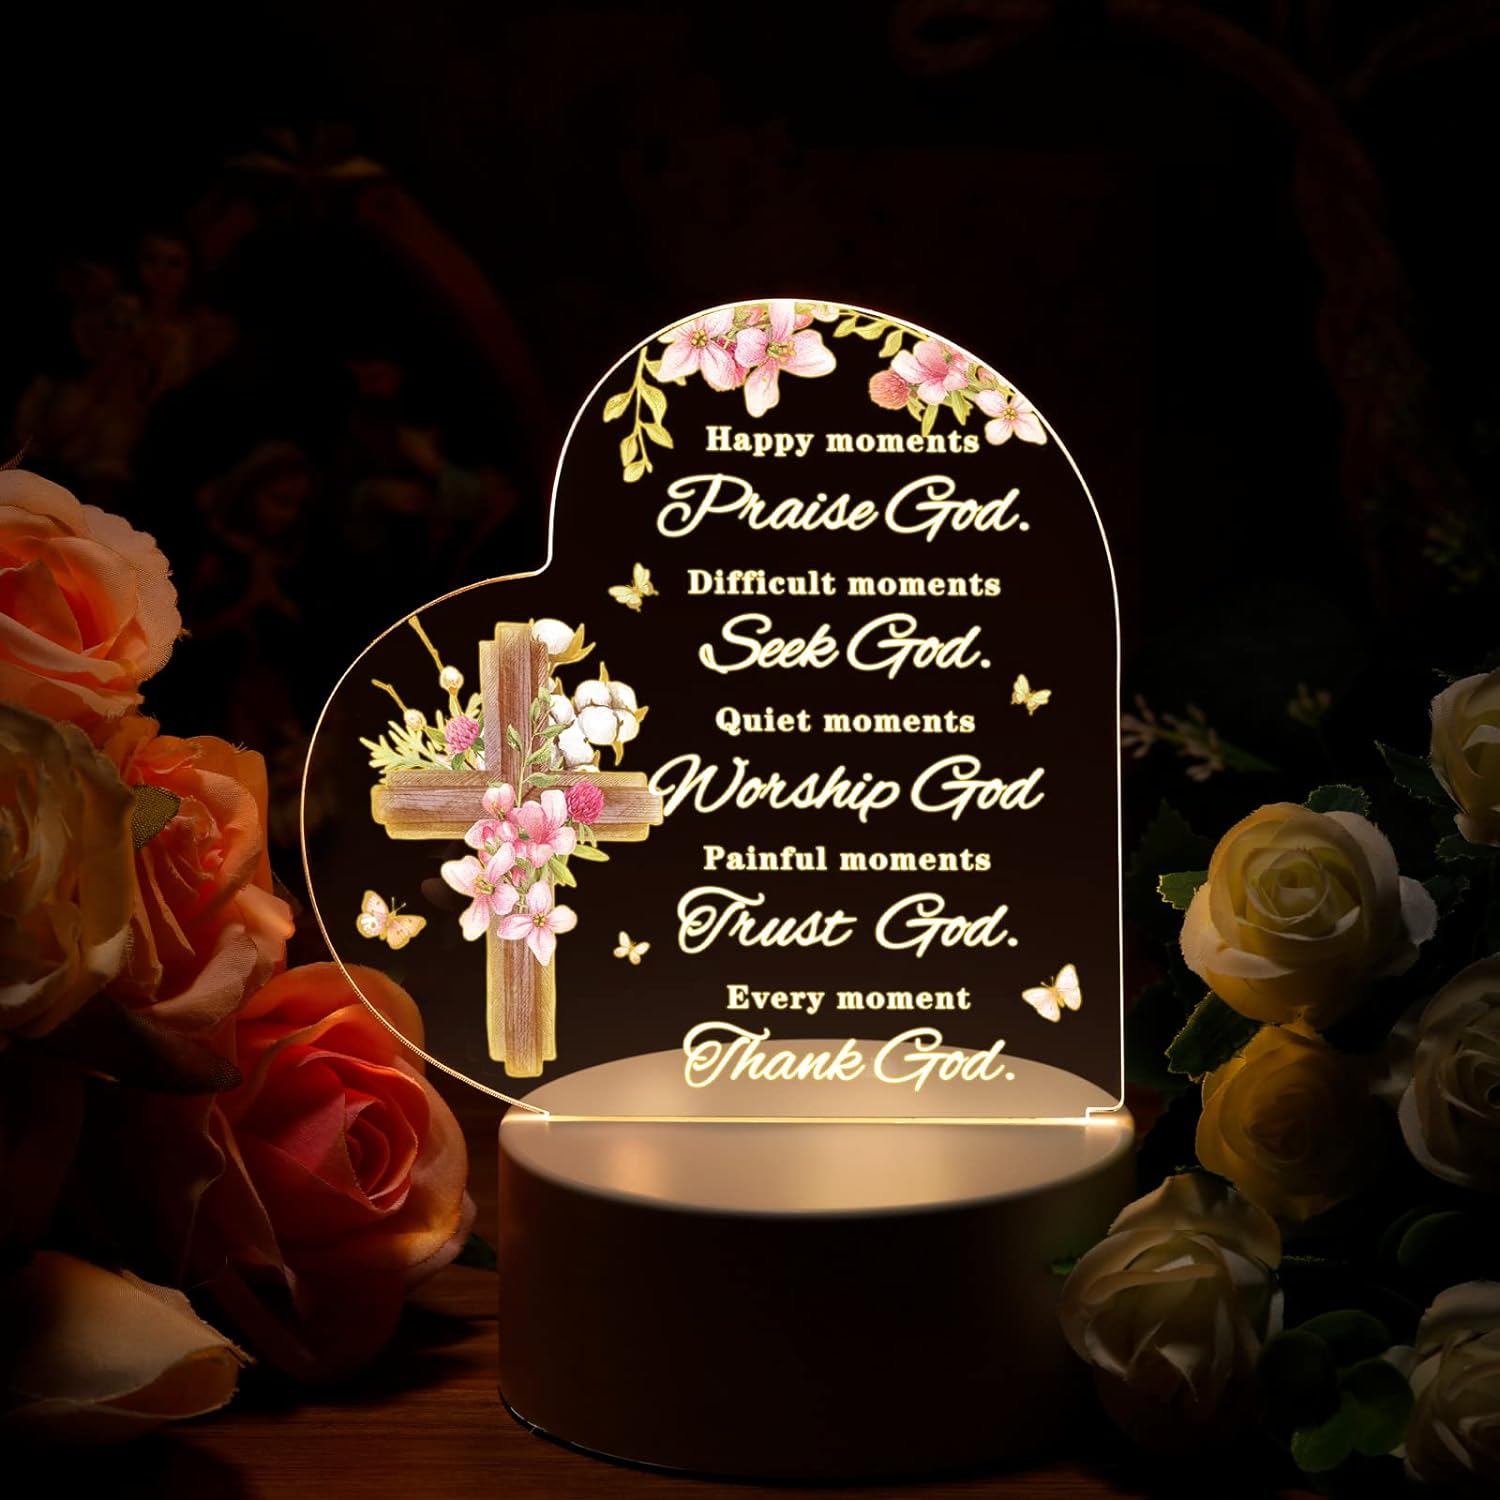 Praise God Acrylic Heart Night Light with Warm Colors LED Lamp Base Christian Gift Idea claimedbygoddesigns